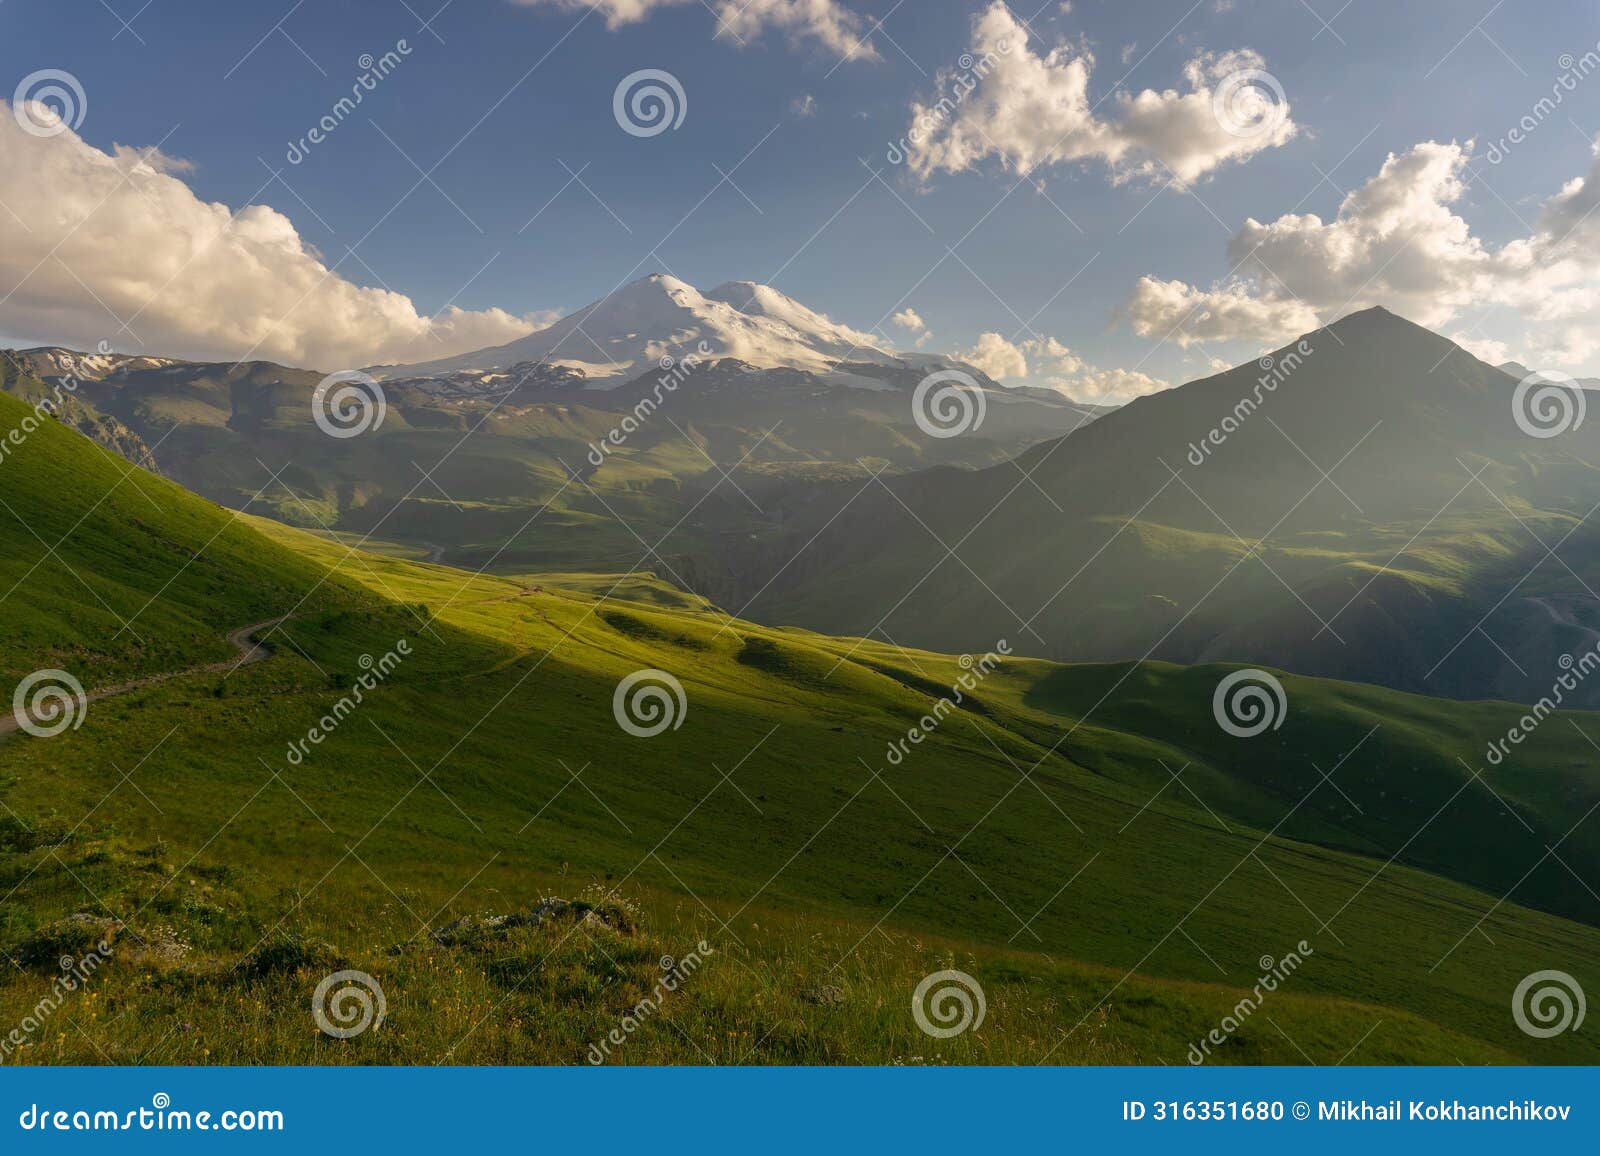 mount elbrus at sunset caucasus mountains